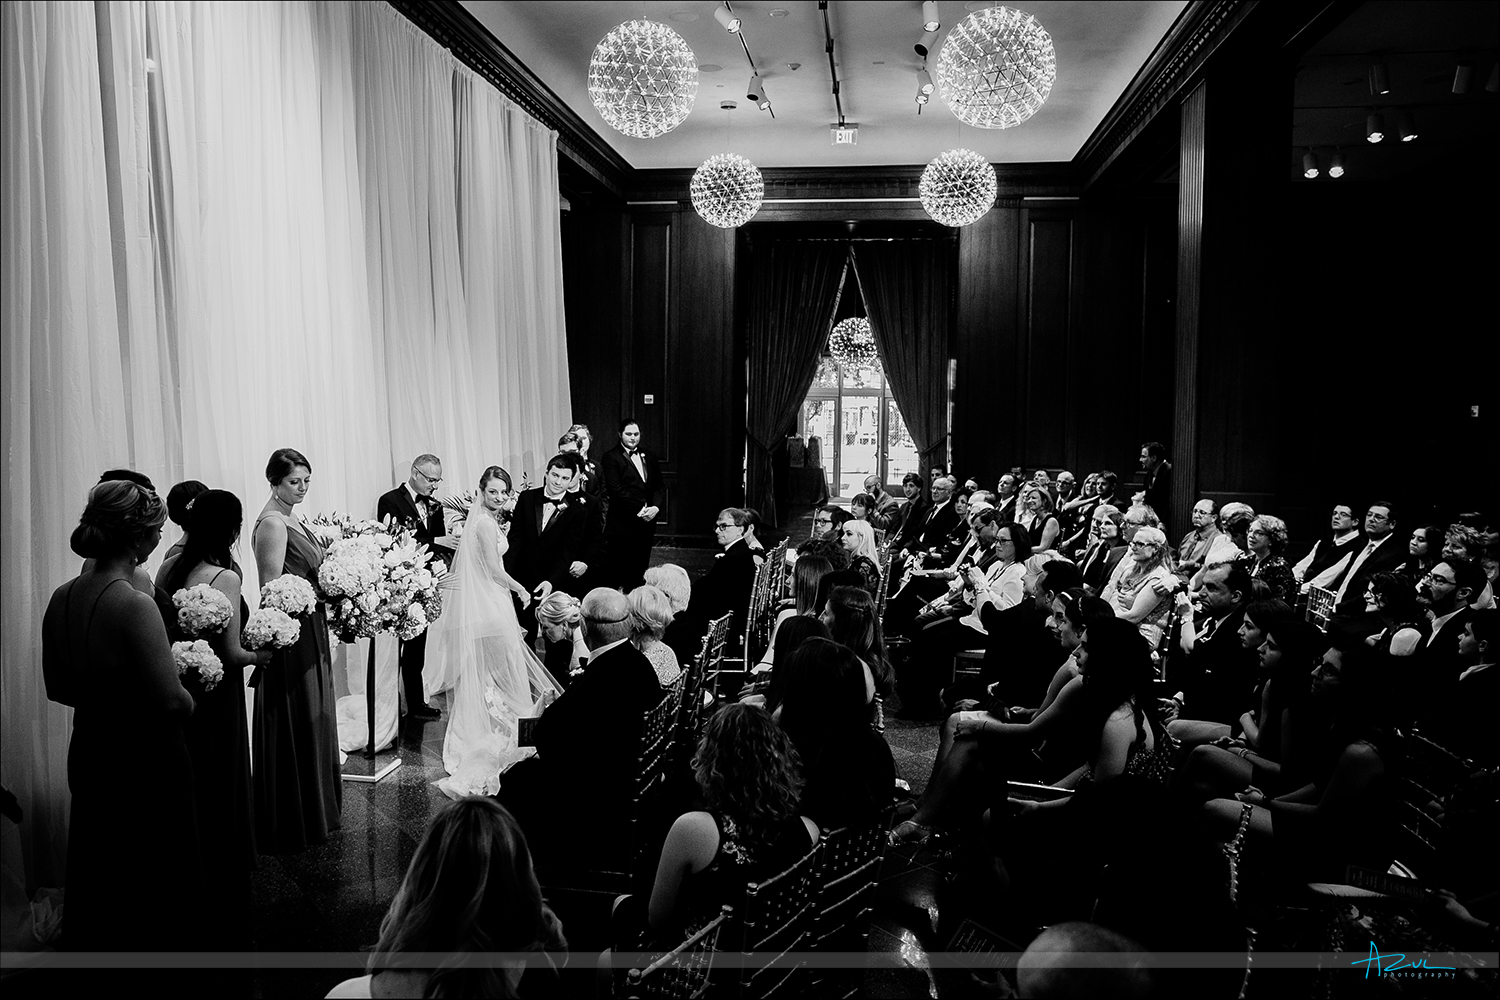 21c Museum & Hotel wedding day beautiful ceremony in Durham NC